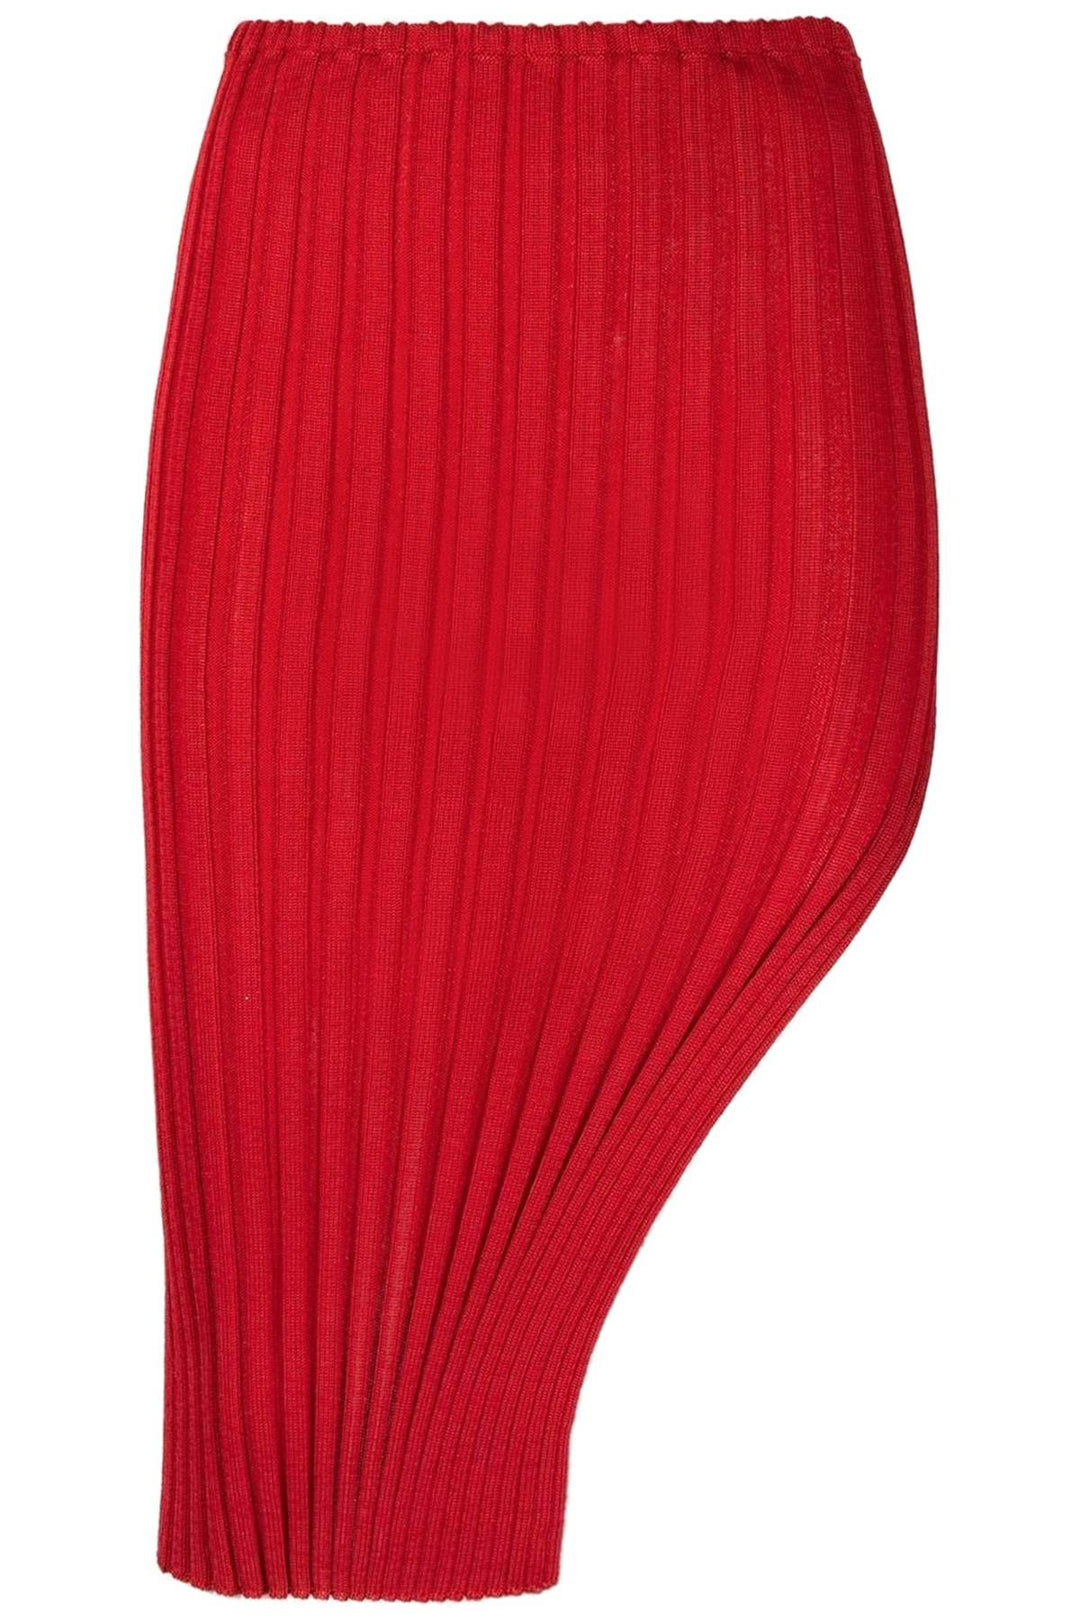 A. Roege Hove Ara Midi Skirt   Rosso